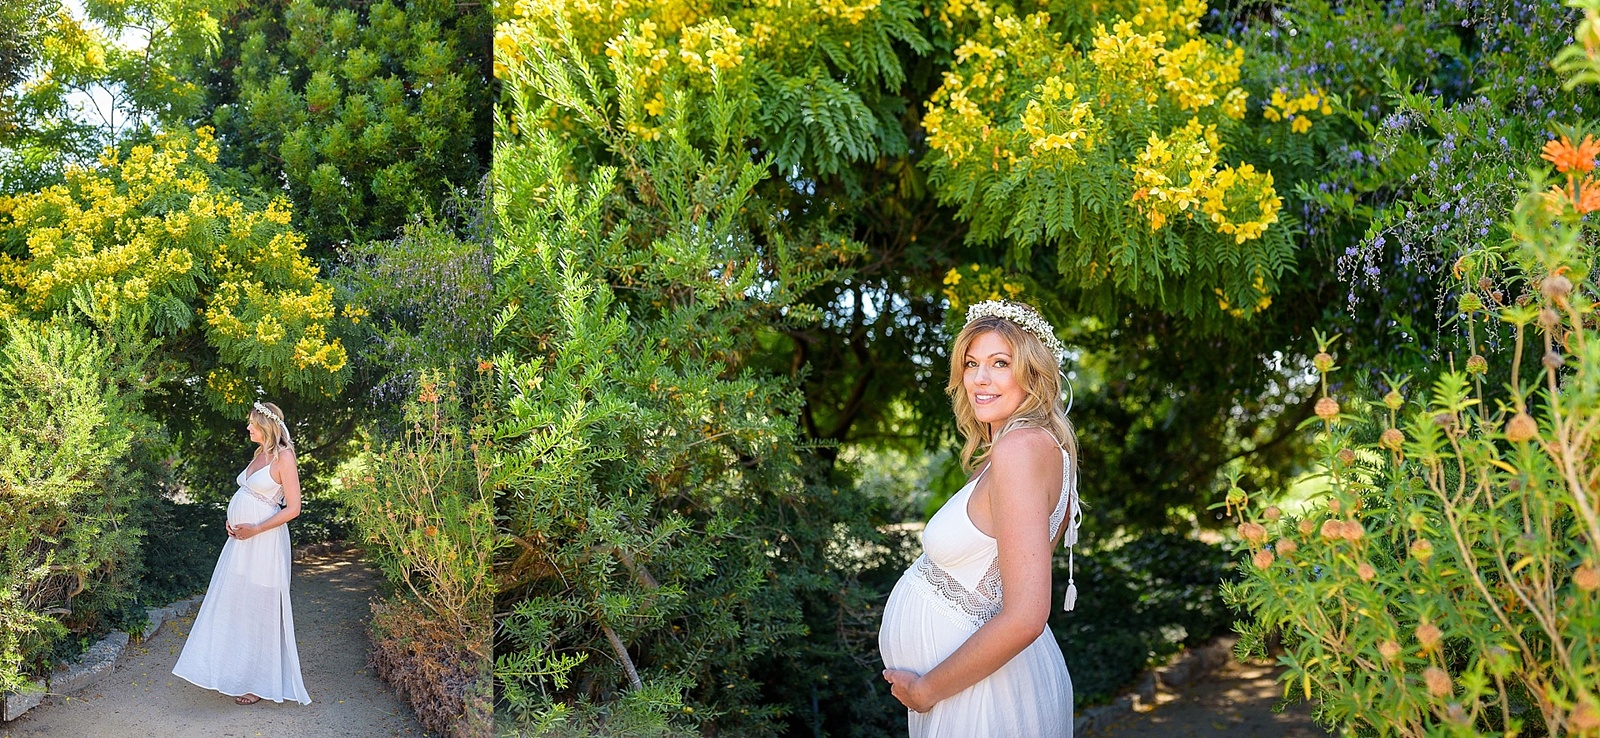 South Coast Botanic Garden Maternity Photos